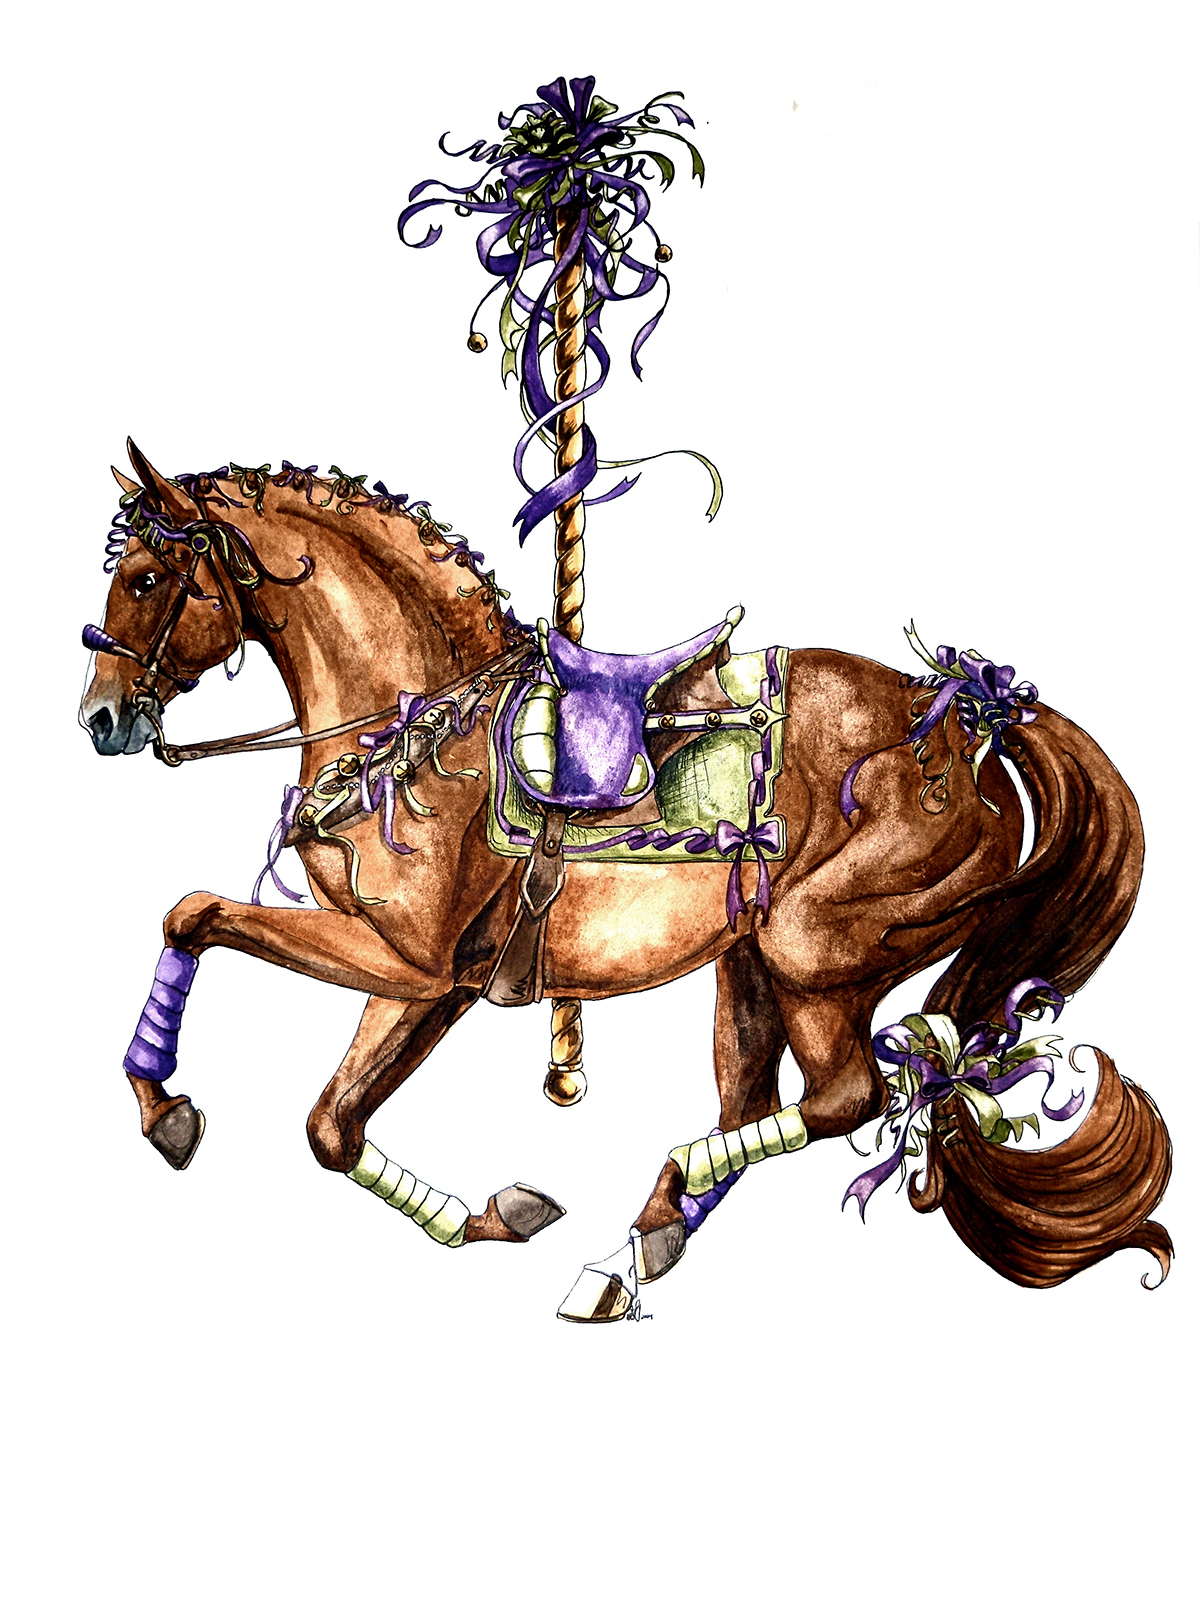 Carousel Horse horse carousel jumper carousel jumper Attraction fairground equestrian equine